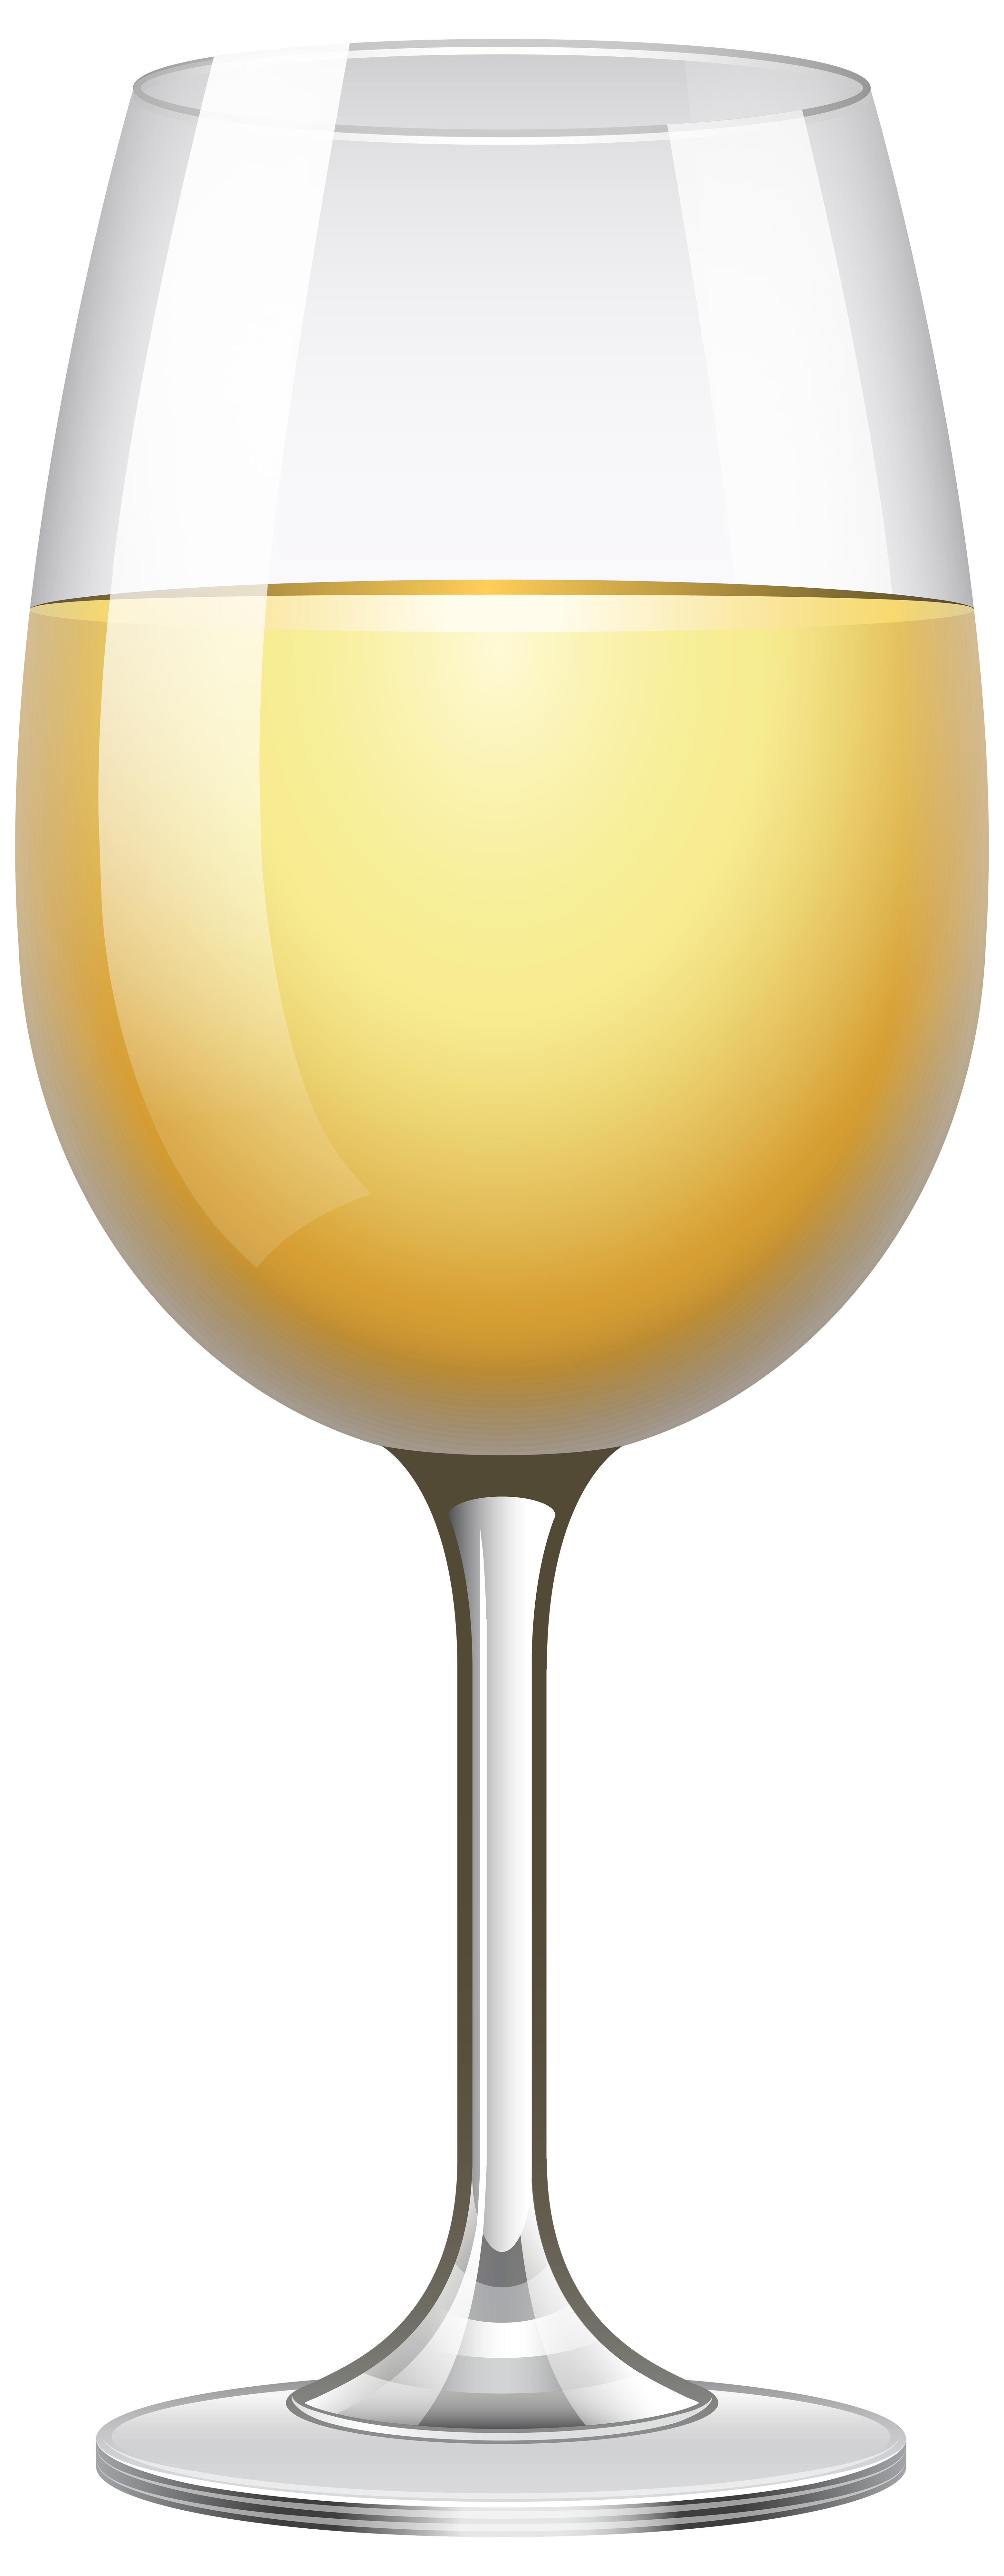 White Wine Glass Transparent PNG Clip Art Image 